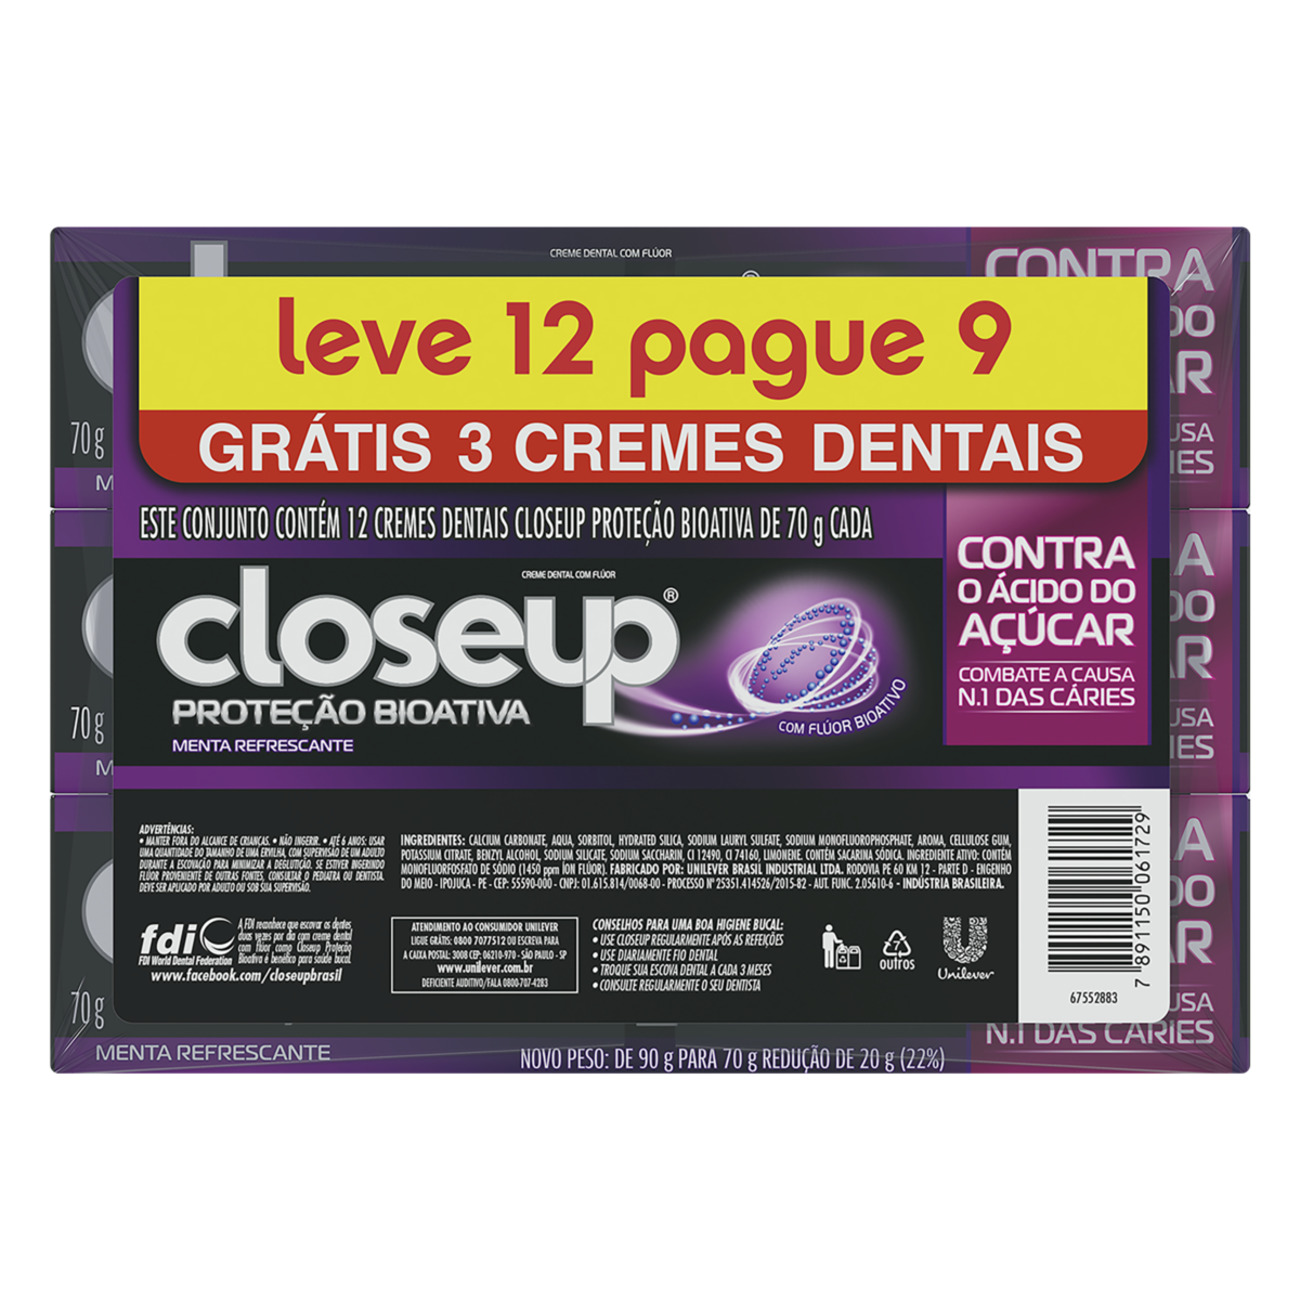 Oferta Creme Dental Close Up Proteo Bioativa 70g